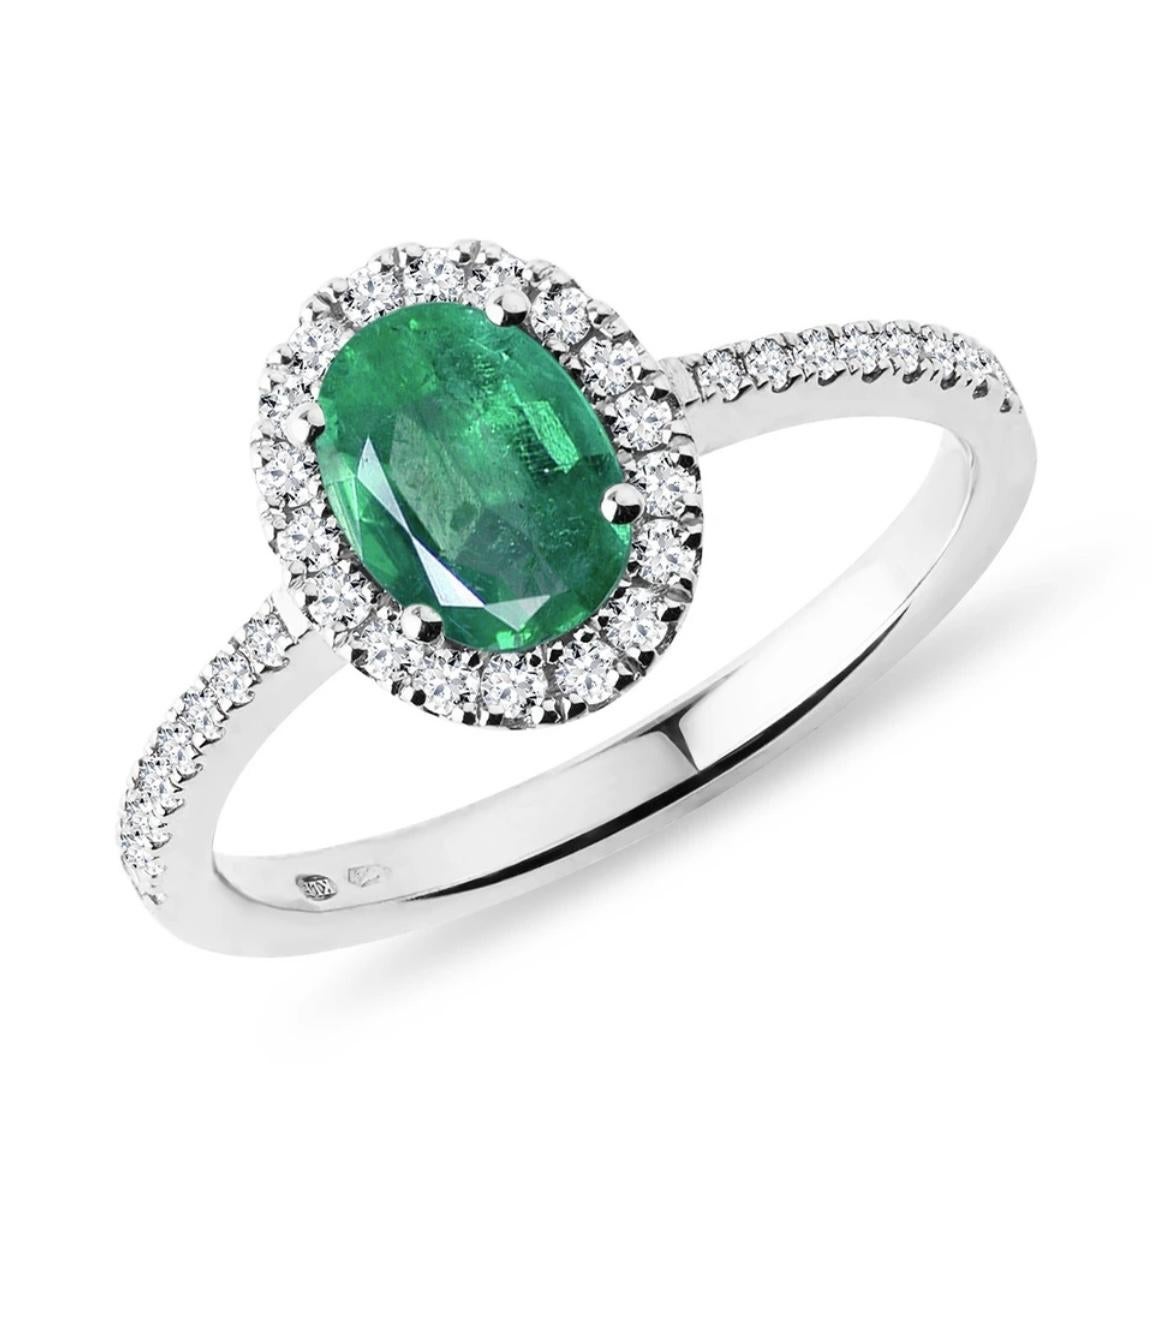 2.5 Carat Oval Natural Zambian Emerald & 1.25ct Diamond Ring 14 Karat White Gold For Sale 7